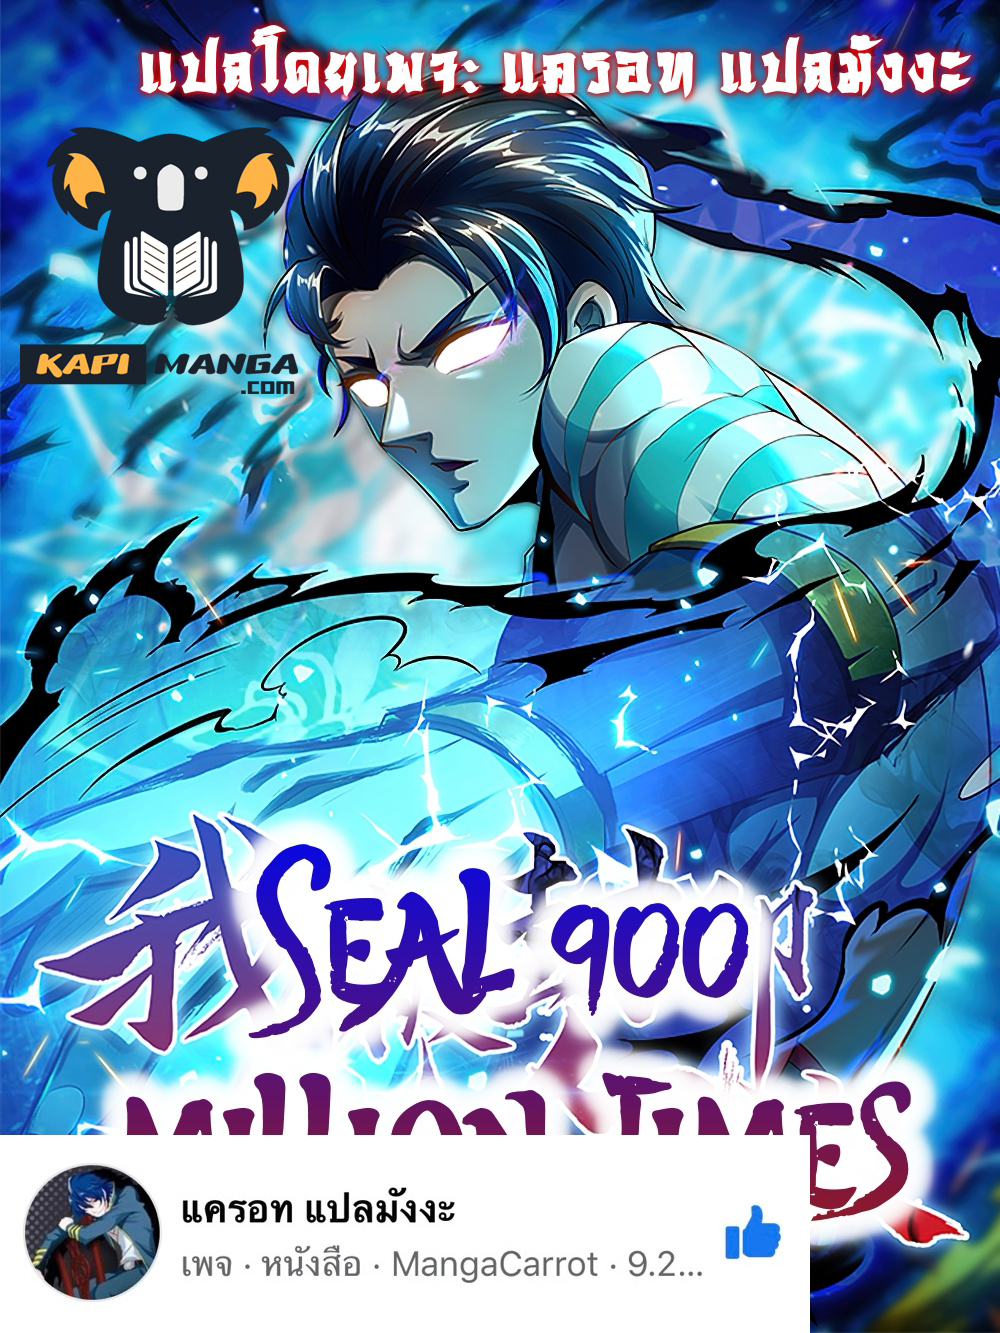 Seal 900 Million Times 26-26